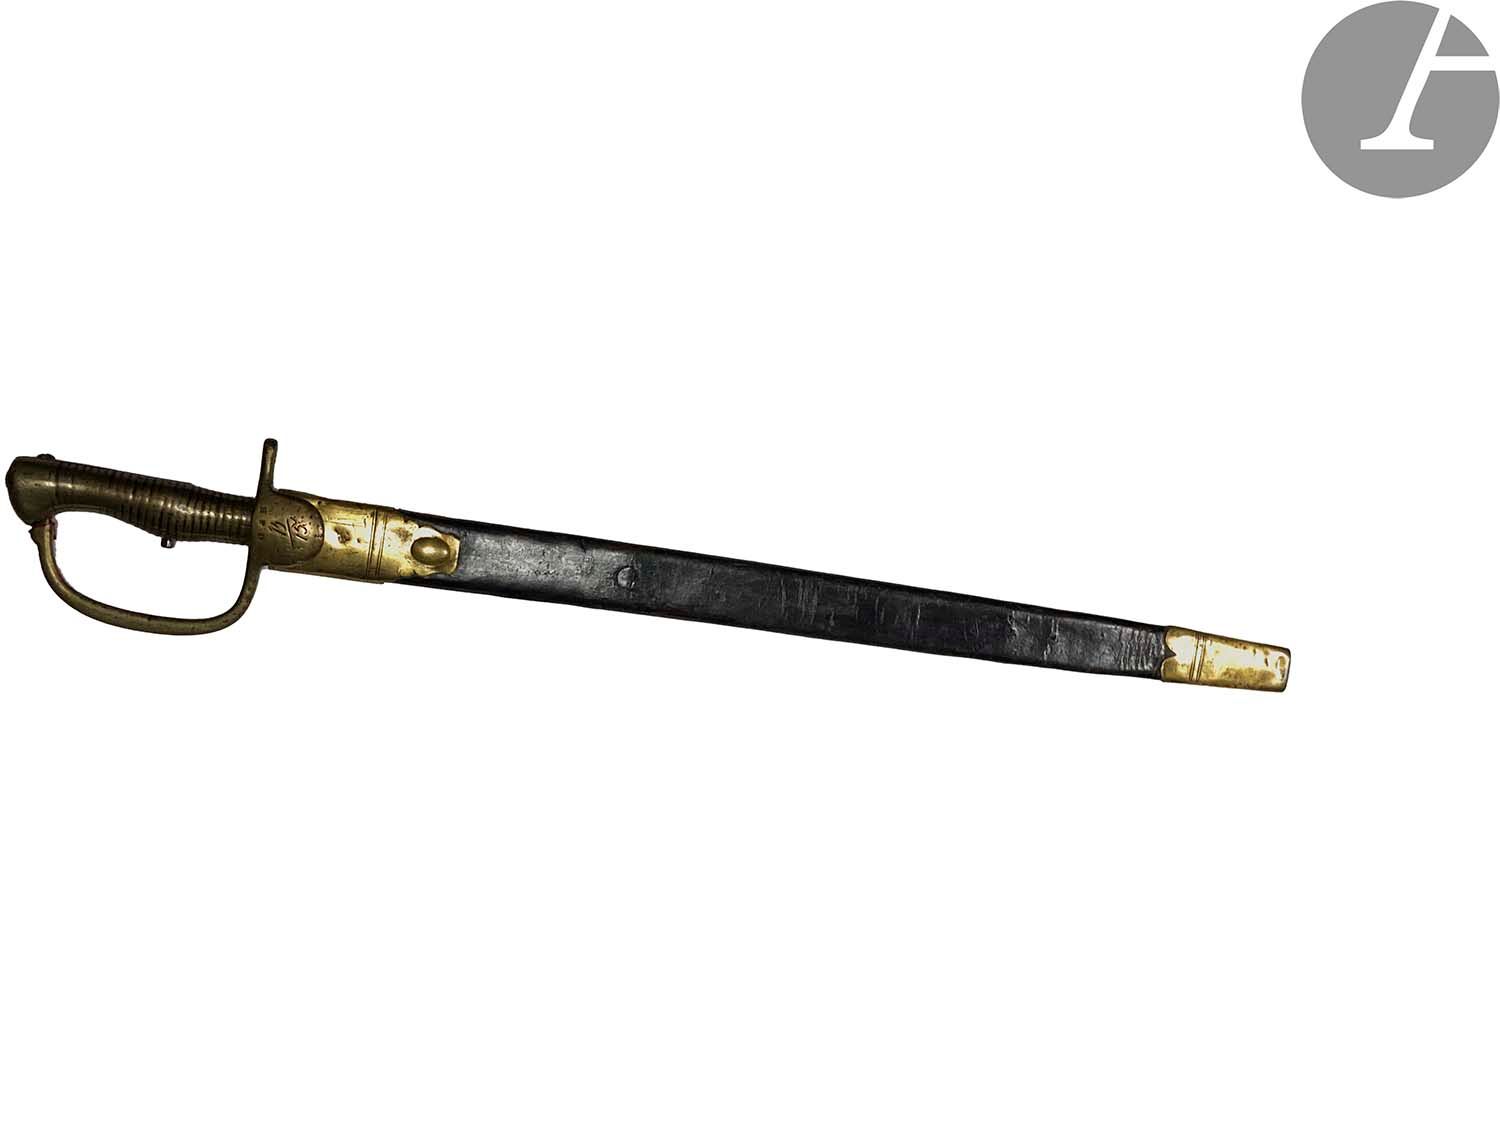 Null Espada bayoneta británica modelo 1801. 
Empuñadura de bronce con muelle, em&hellip;